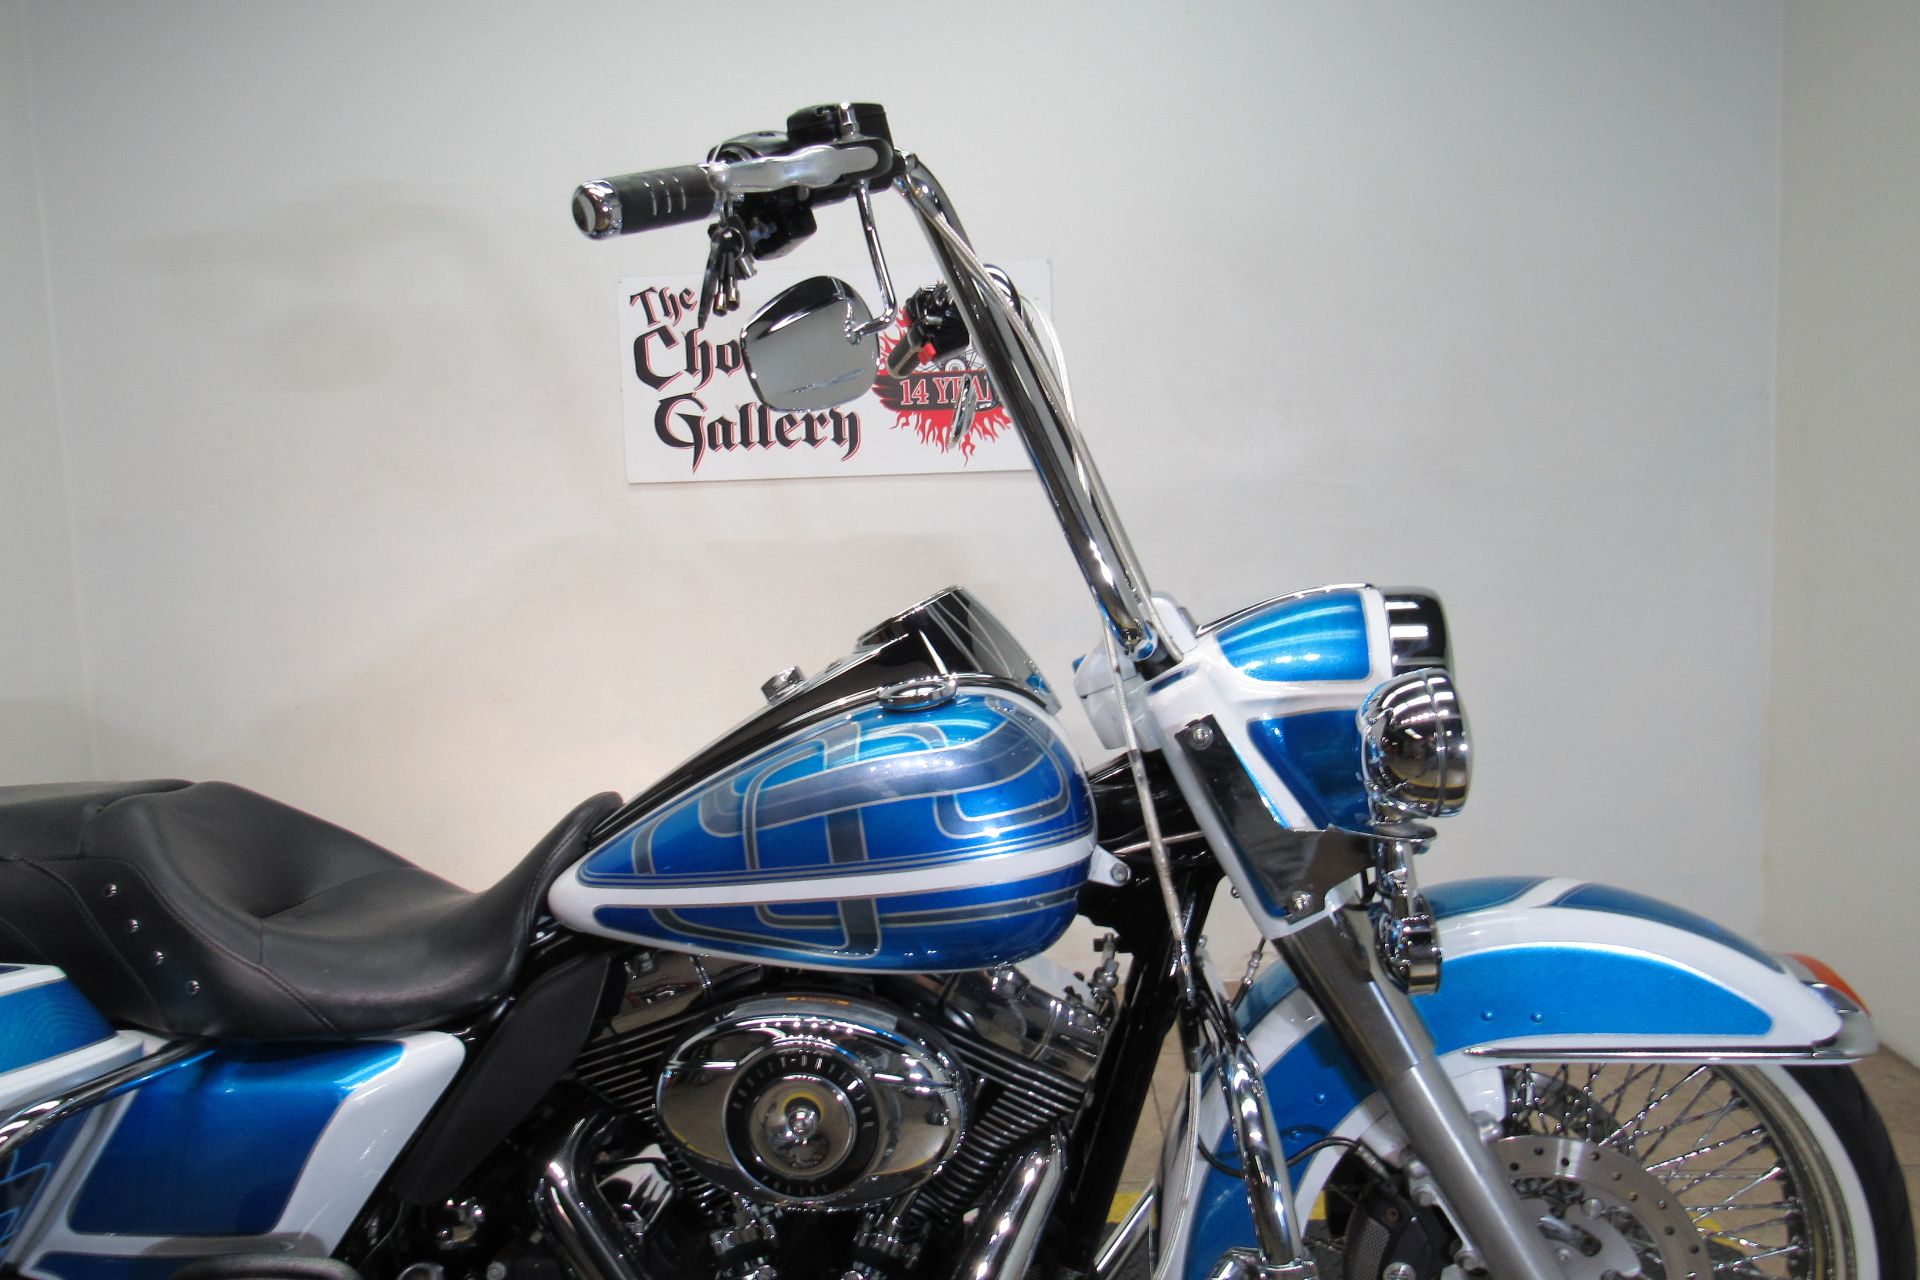 2011 Harley-Davidson Police Road King® in Temecula, California - Photo 9